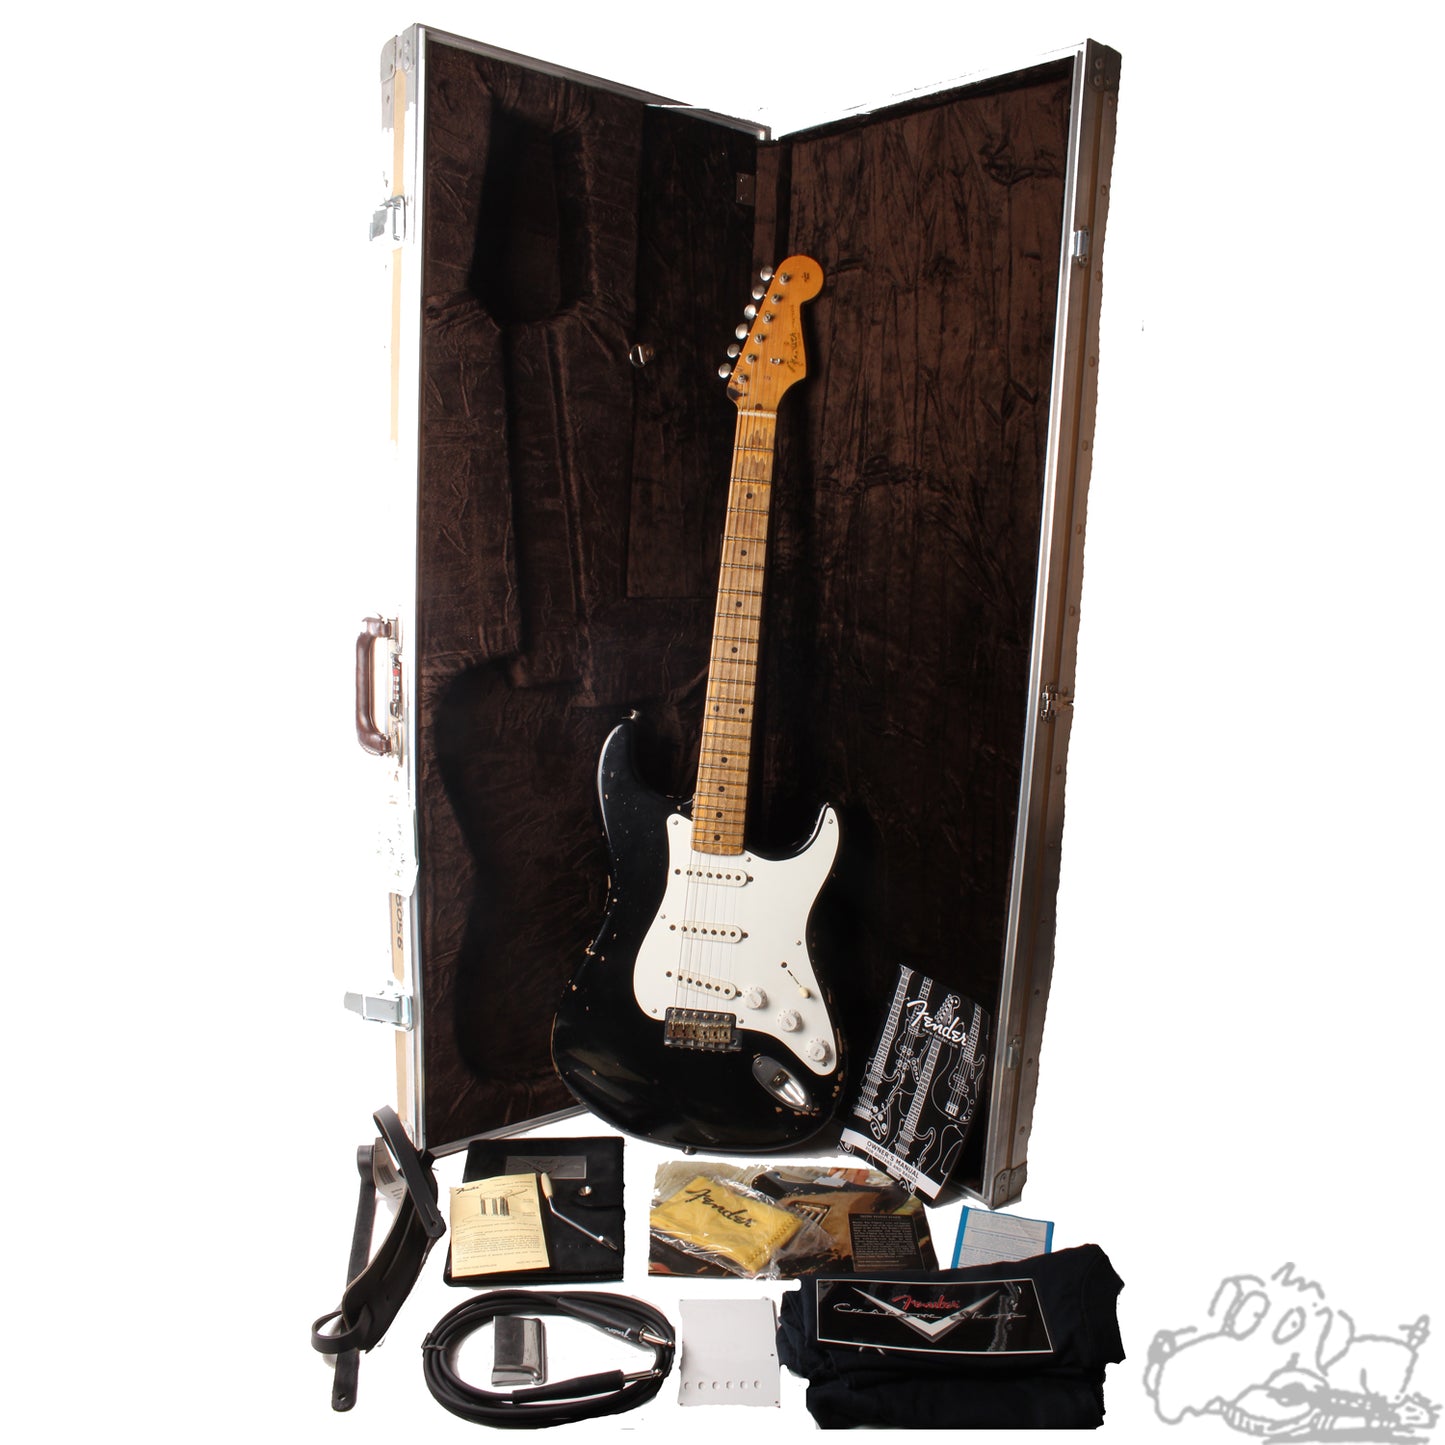 2006 Fender Custom Shop Stratocaster "Blackie" Limited Edition